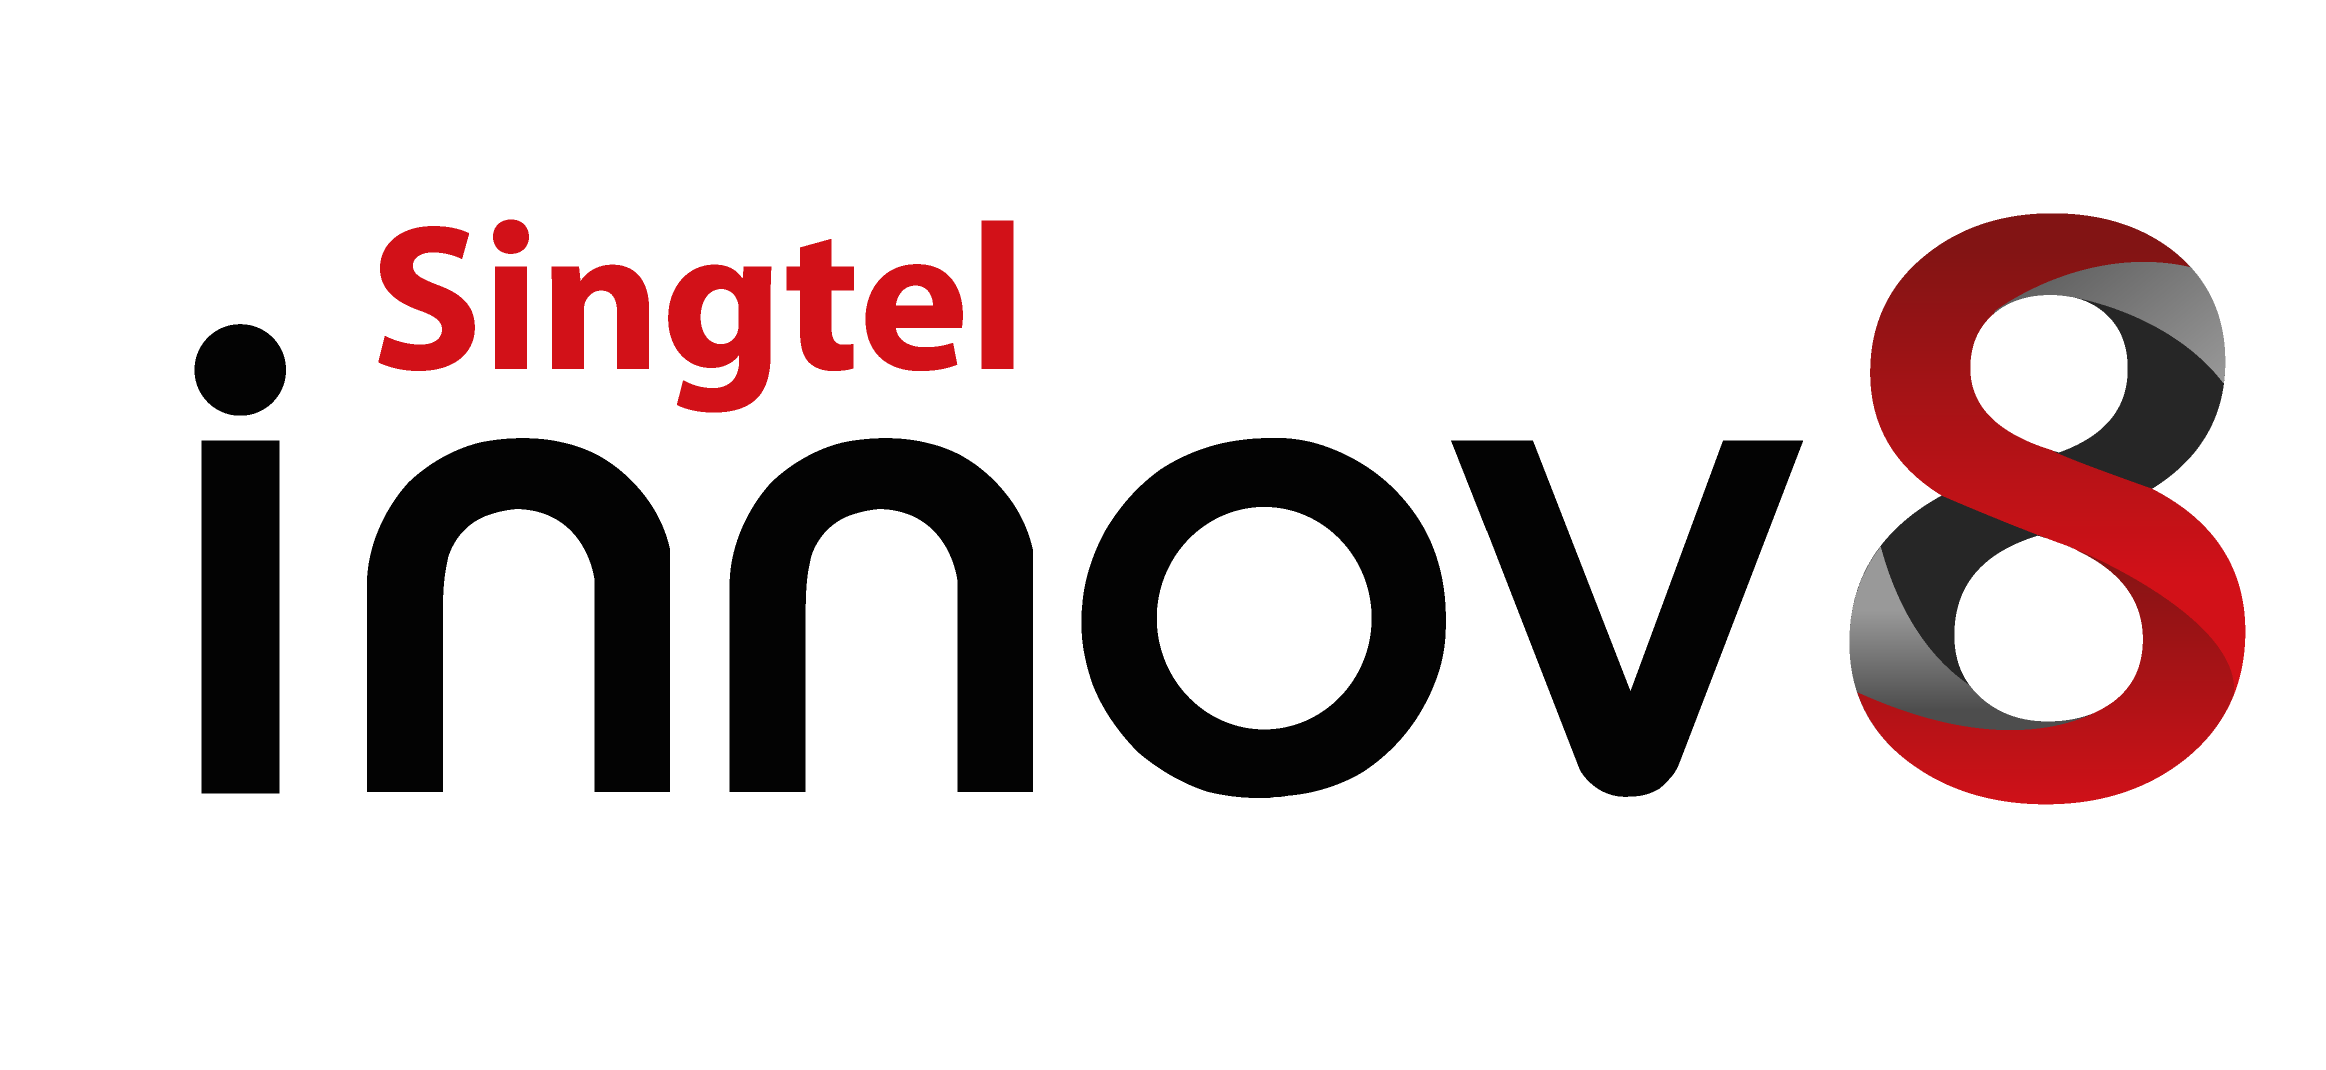 File:Singtel logo.svg